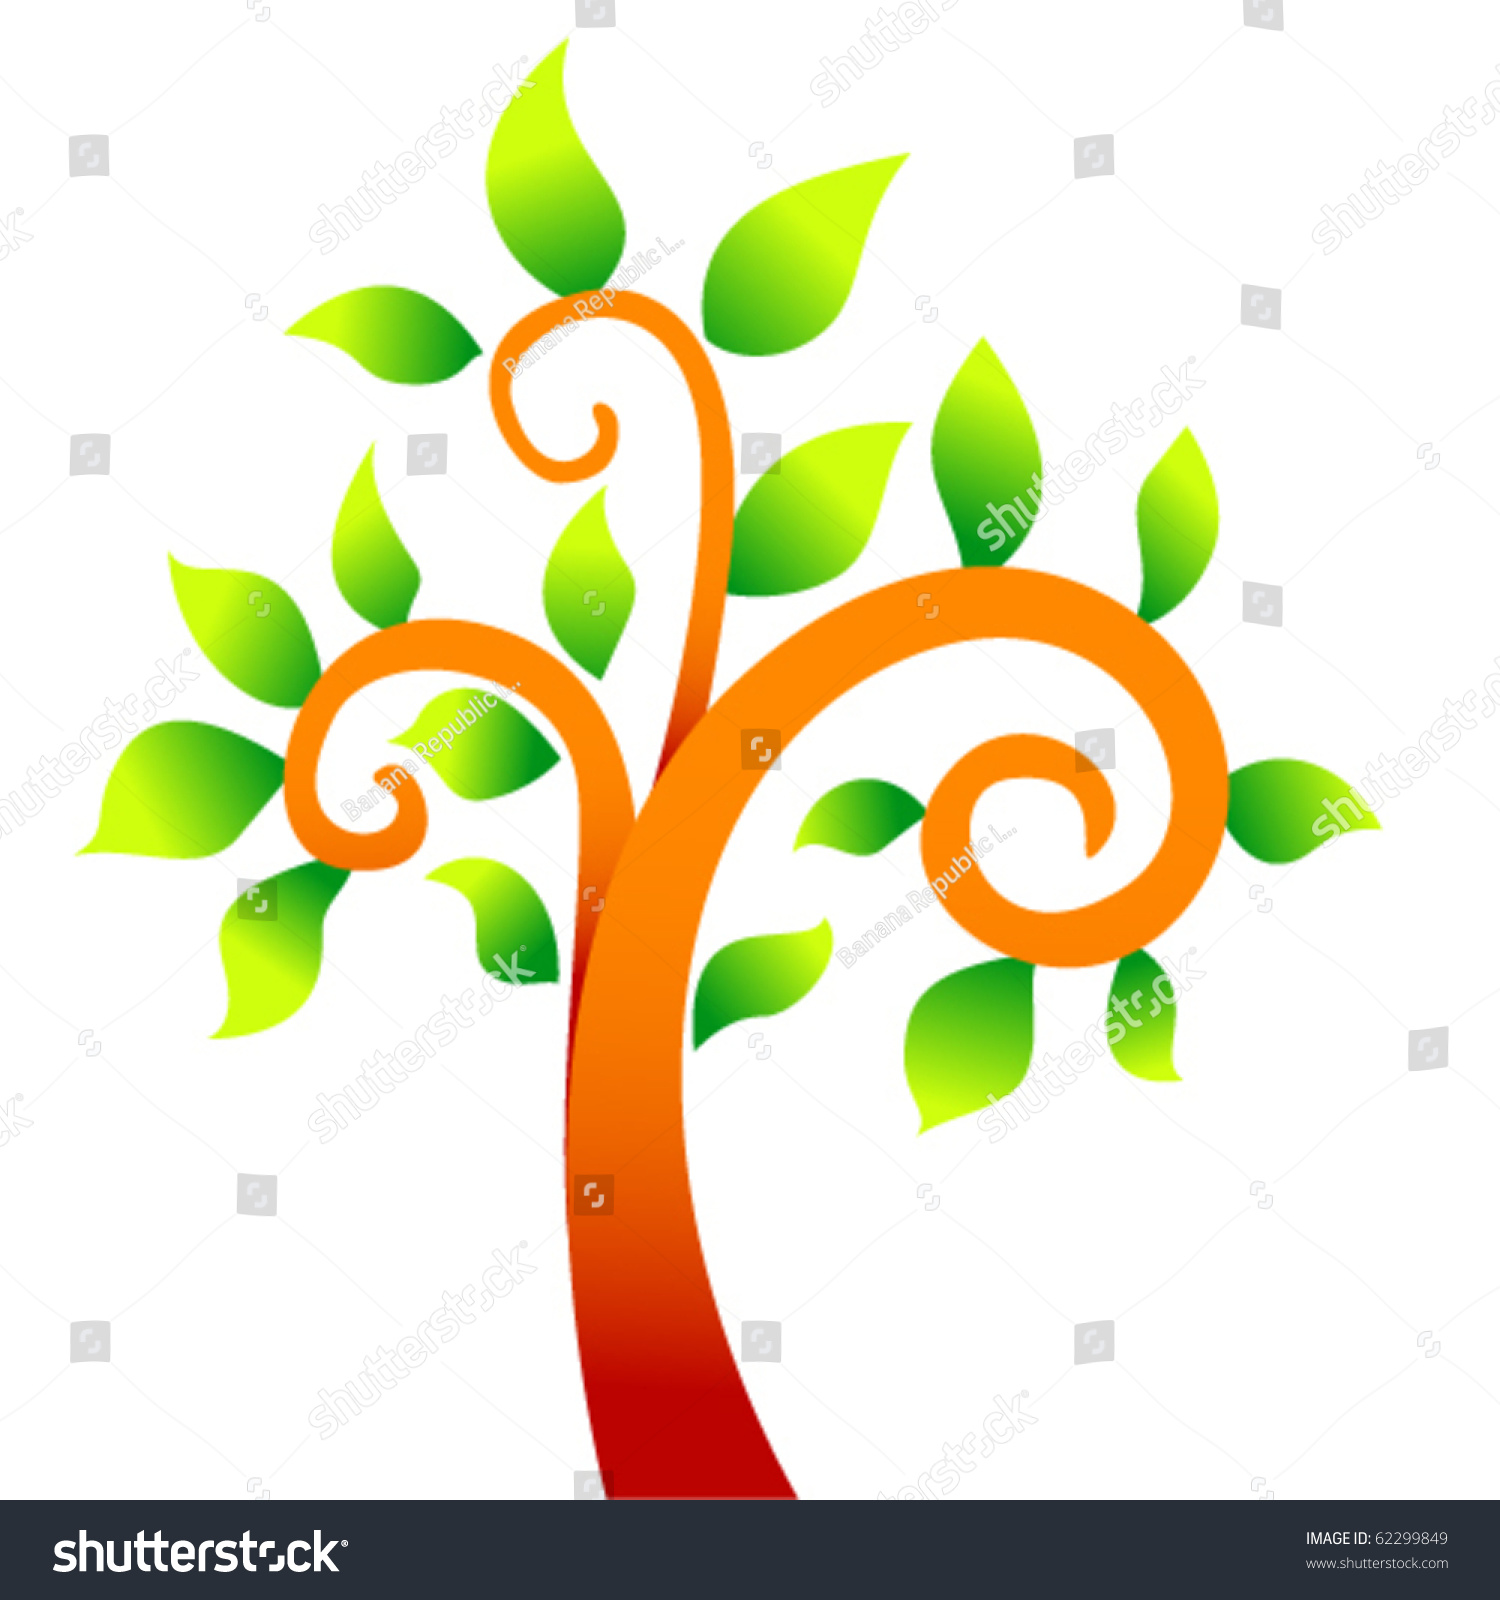 Tree Symbol Graphic Design Stock Vector Illustration 62299849